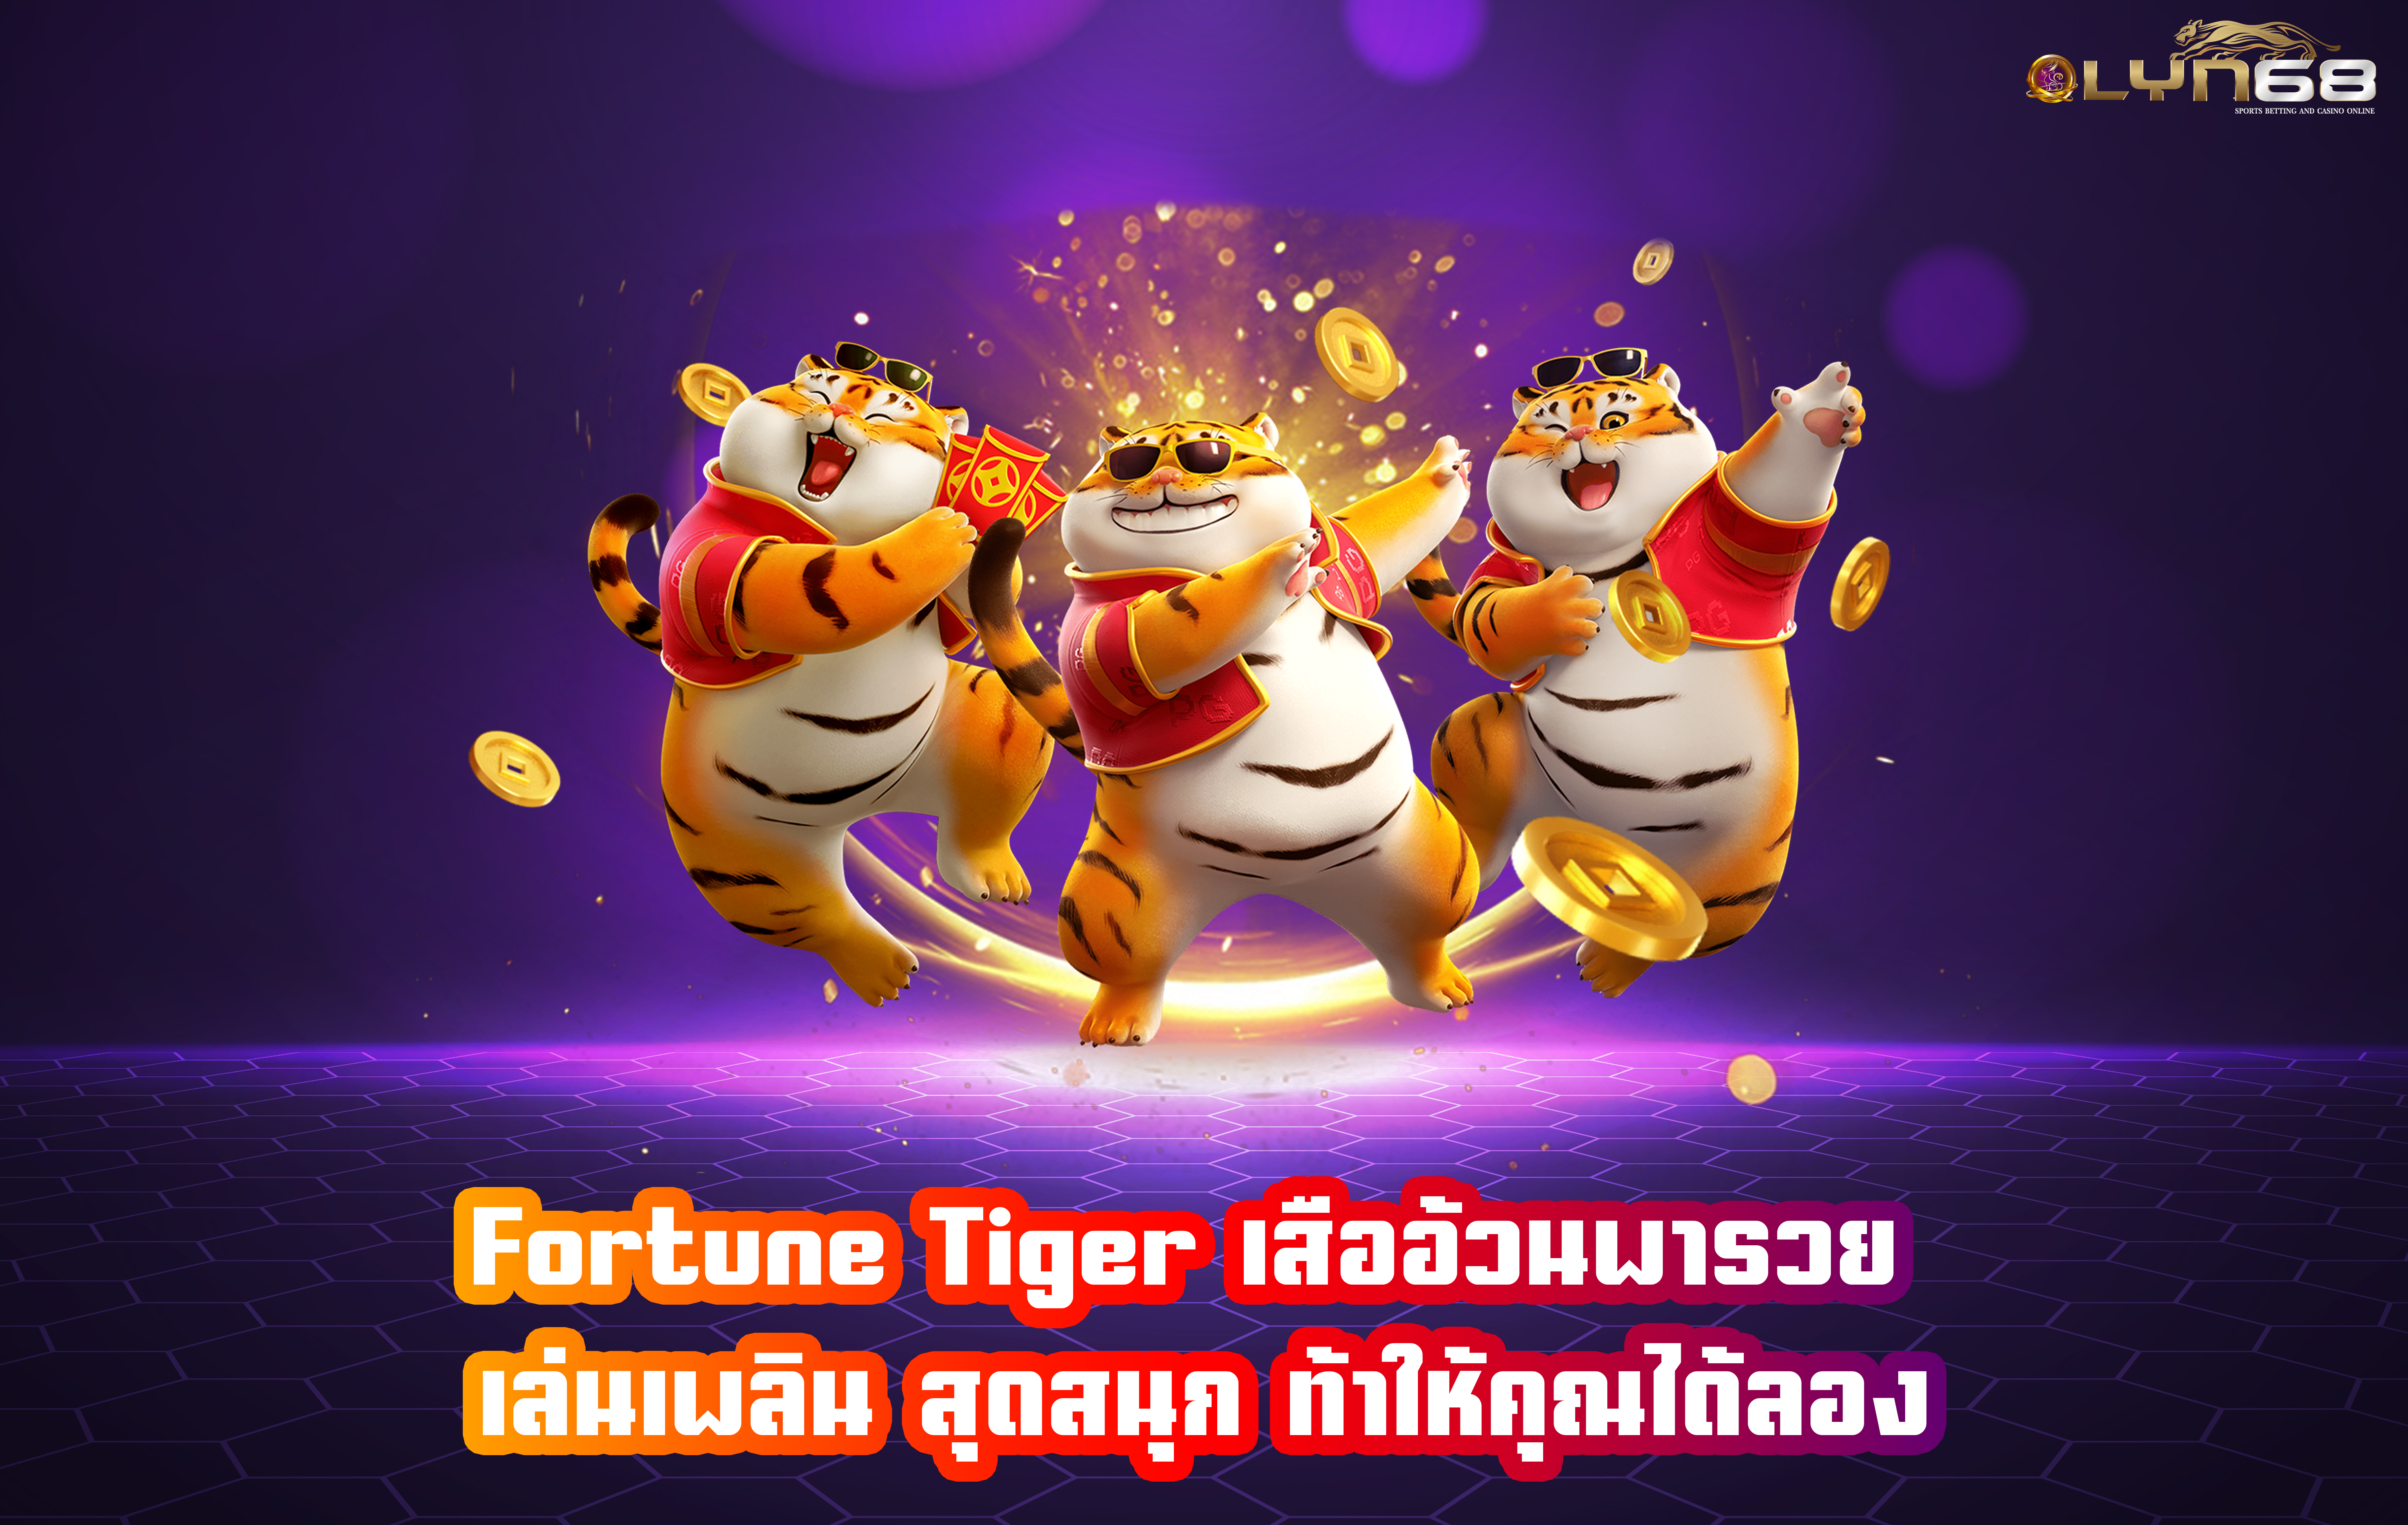 Fortune Tiger เสืออ้วนพารวย เล่นเพลิน สุดสนุก ท้าให้คุณได้ลอง